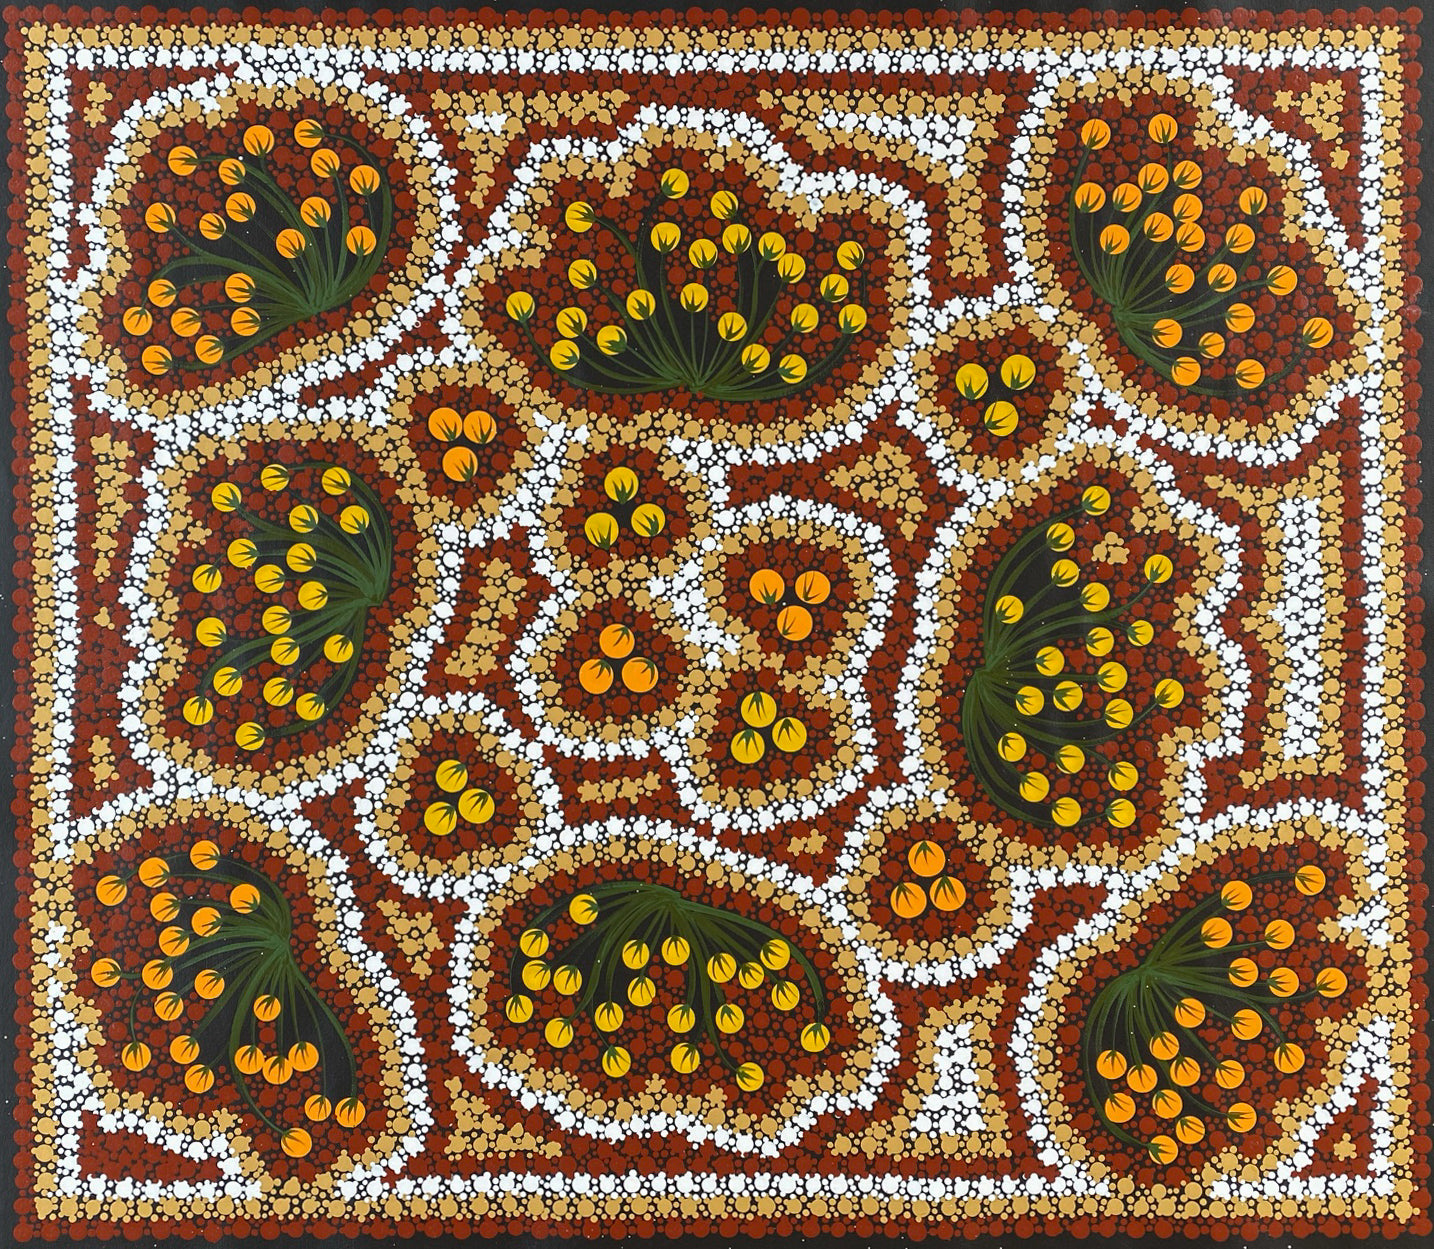 Brenda Nangala - Derby - Western Australia - Bush Raisin - Bush Tucker - Australian Art - Indigenous Art - Aboriginal Art - Dot Painting - Dot Art - Traditional Art - Darwin Based Gallery 